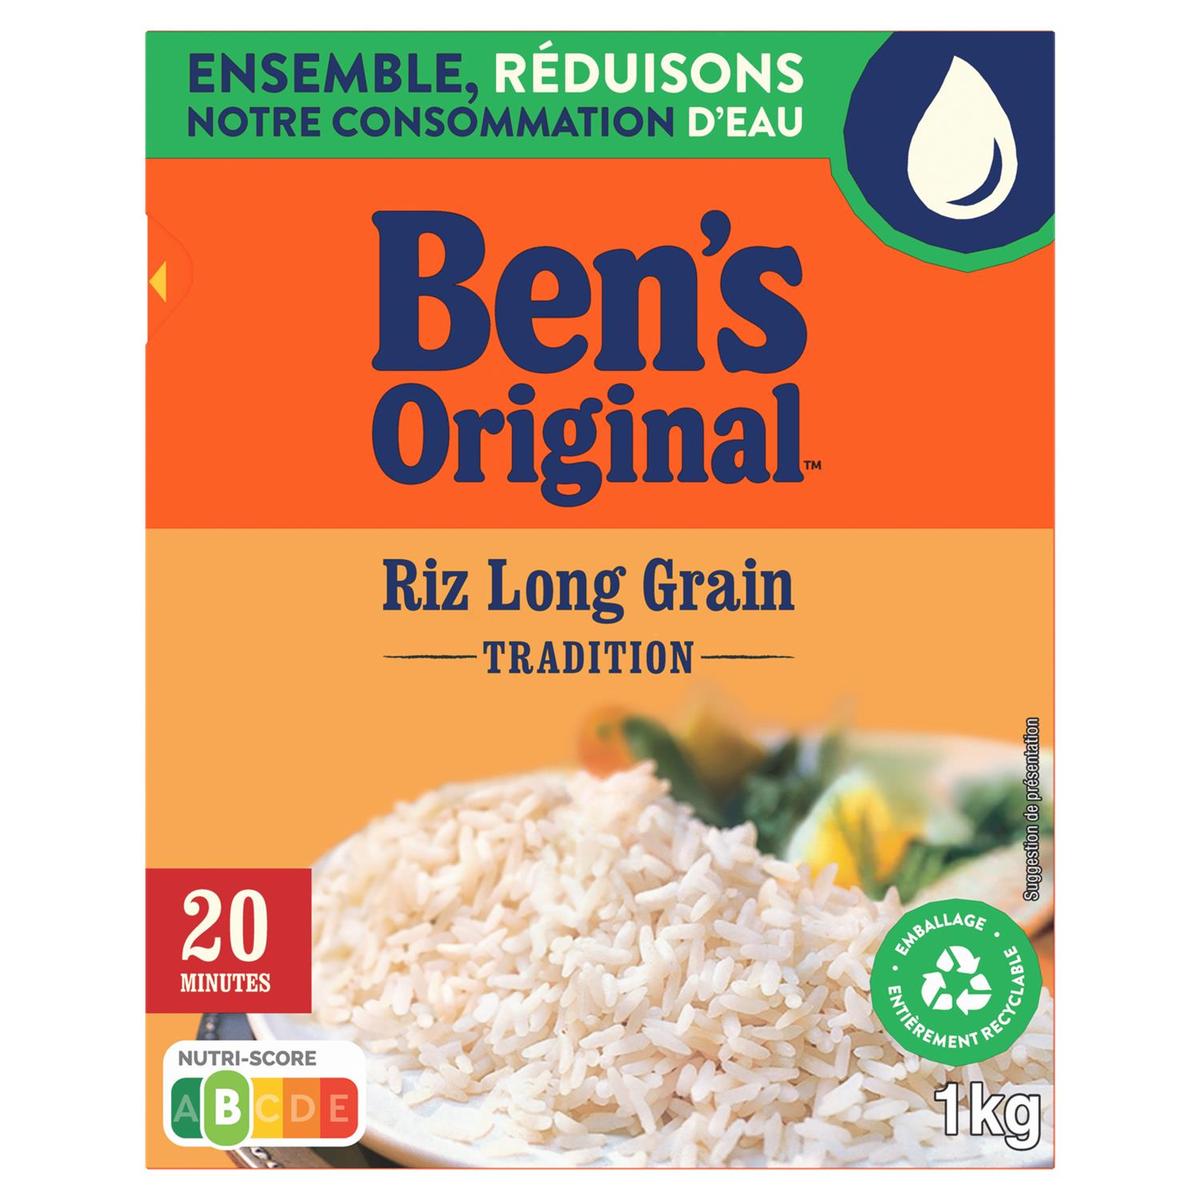 Acheter Ben's Original Riz Long Grain Tradition 20 minutes Vrac, 1kg